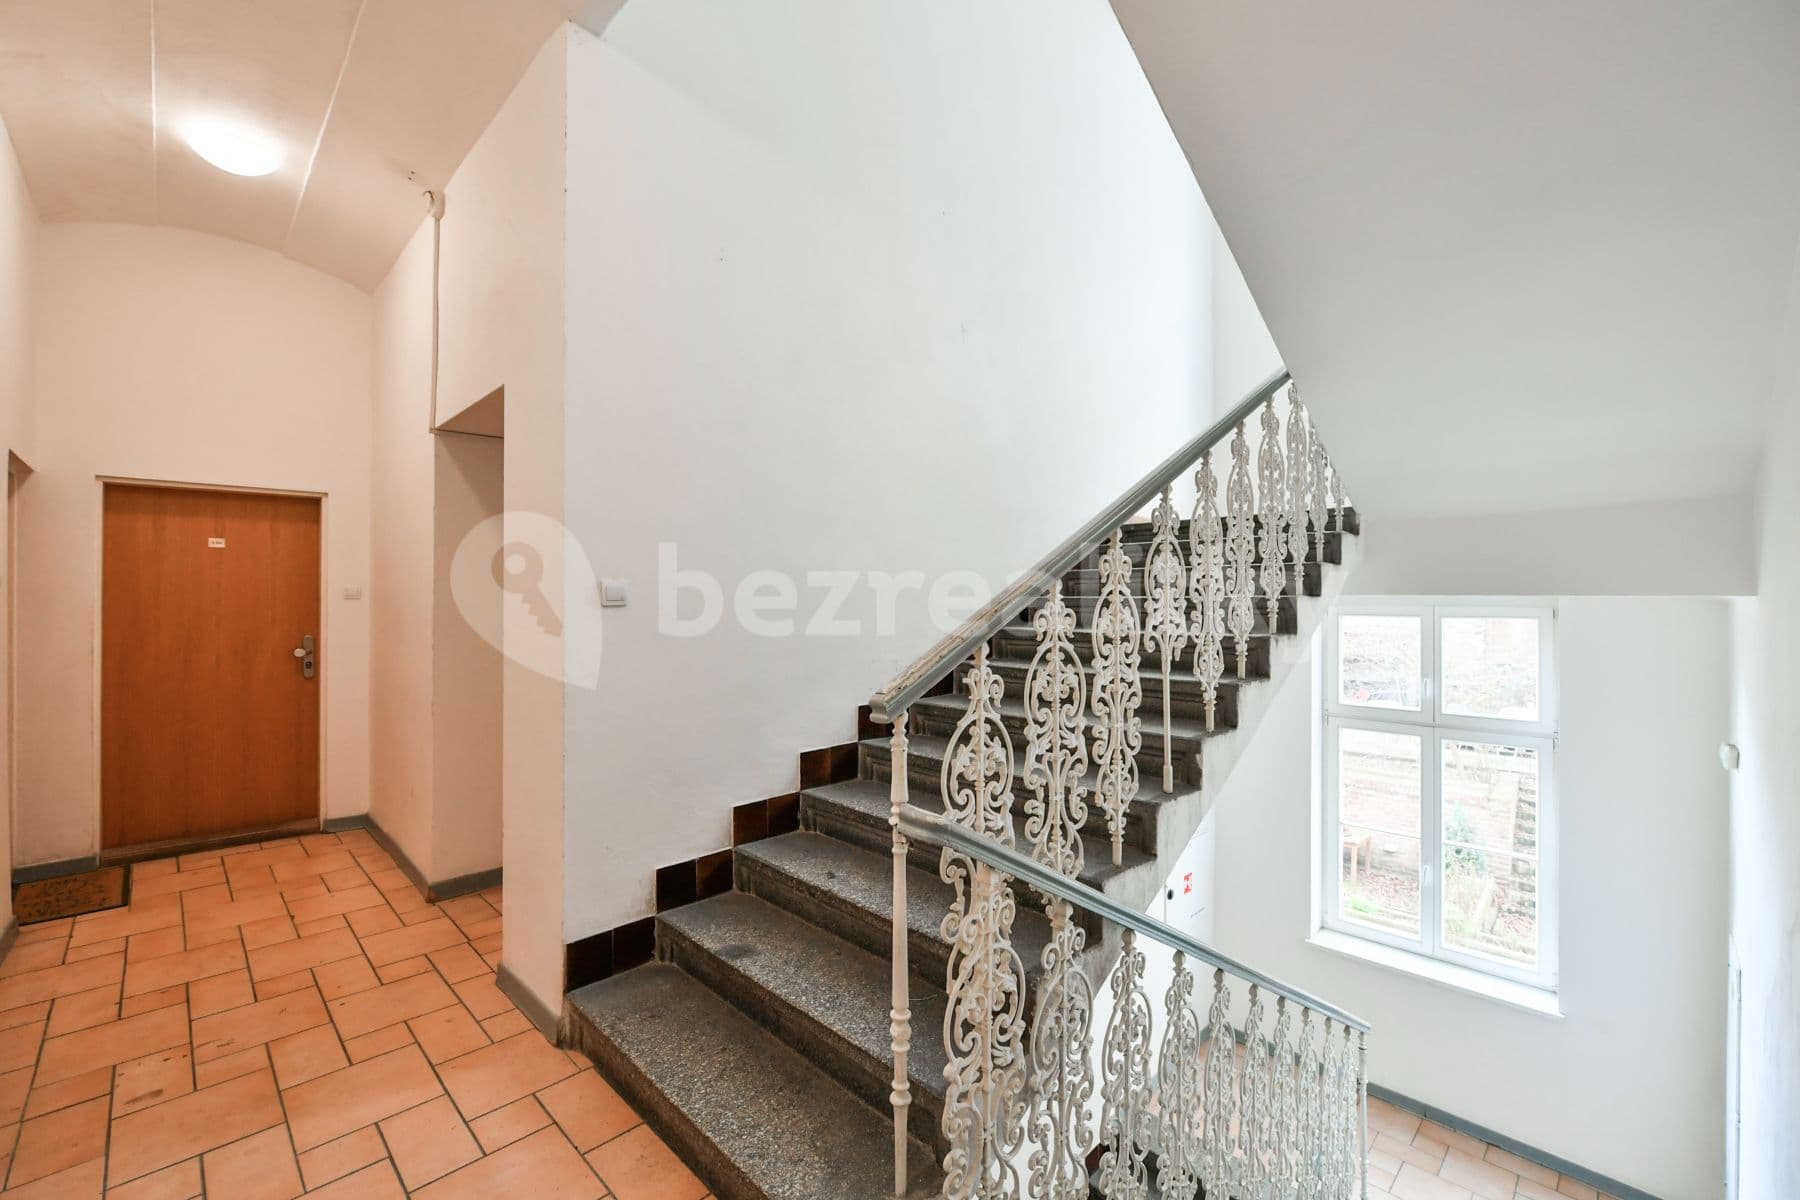 Predaj bytu 2-izbový 35 m², Cimburkova, Praha, Praha